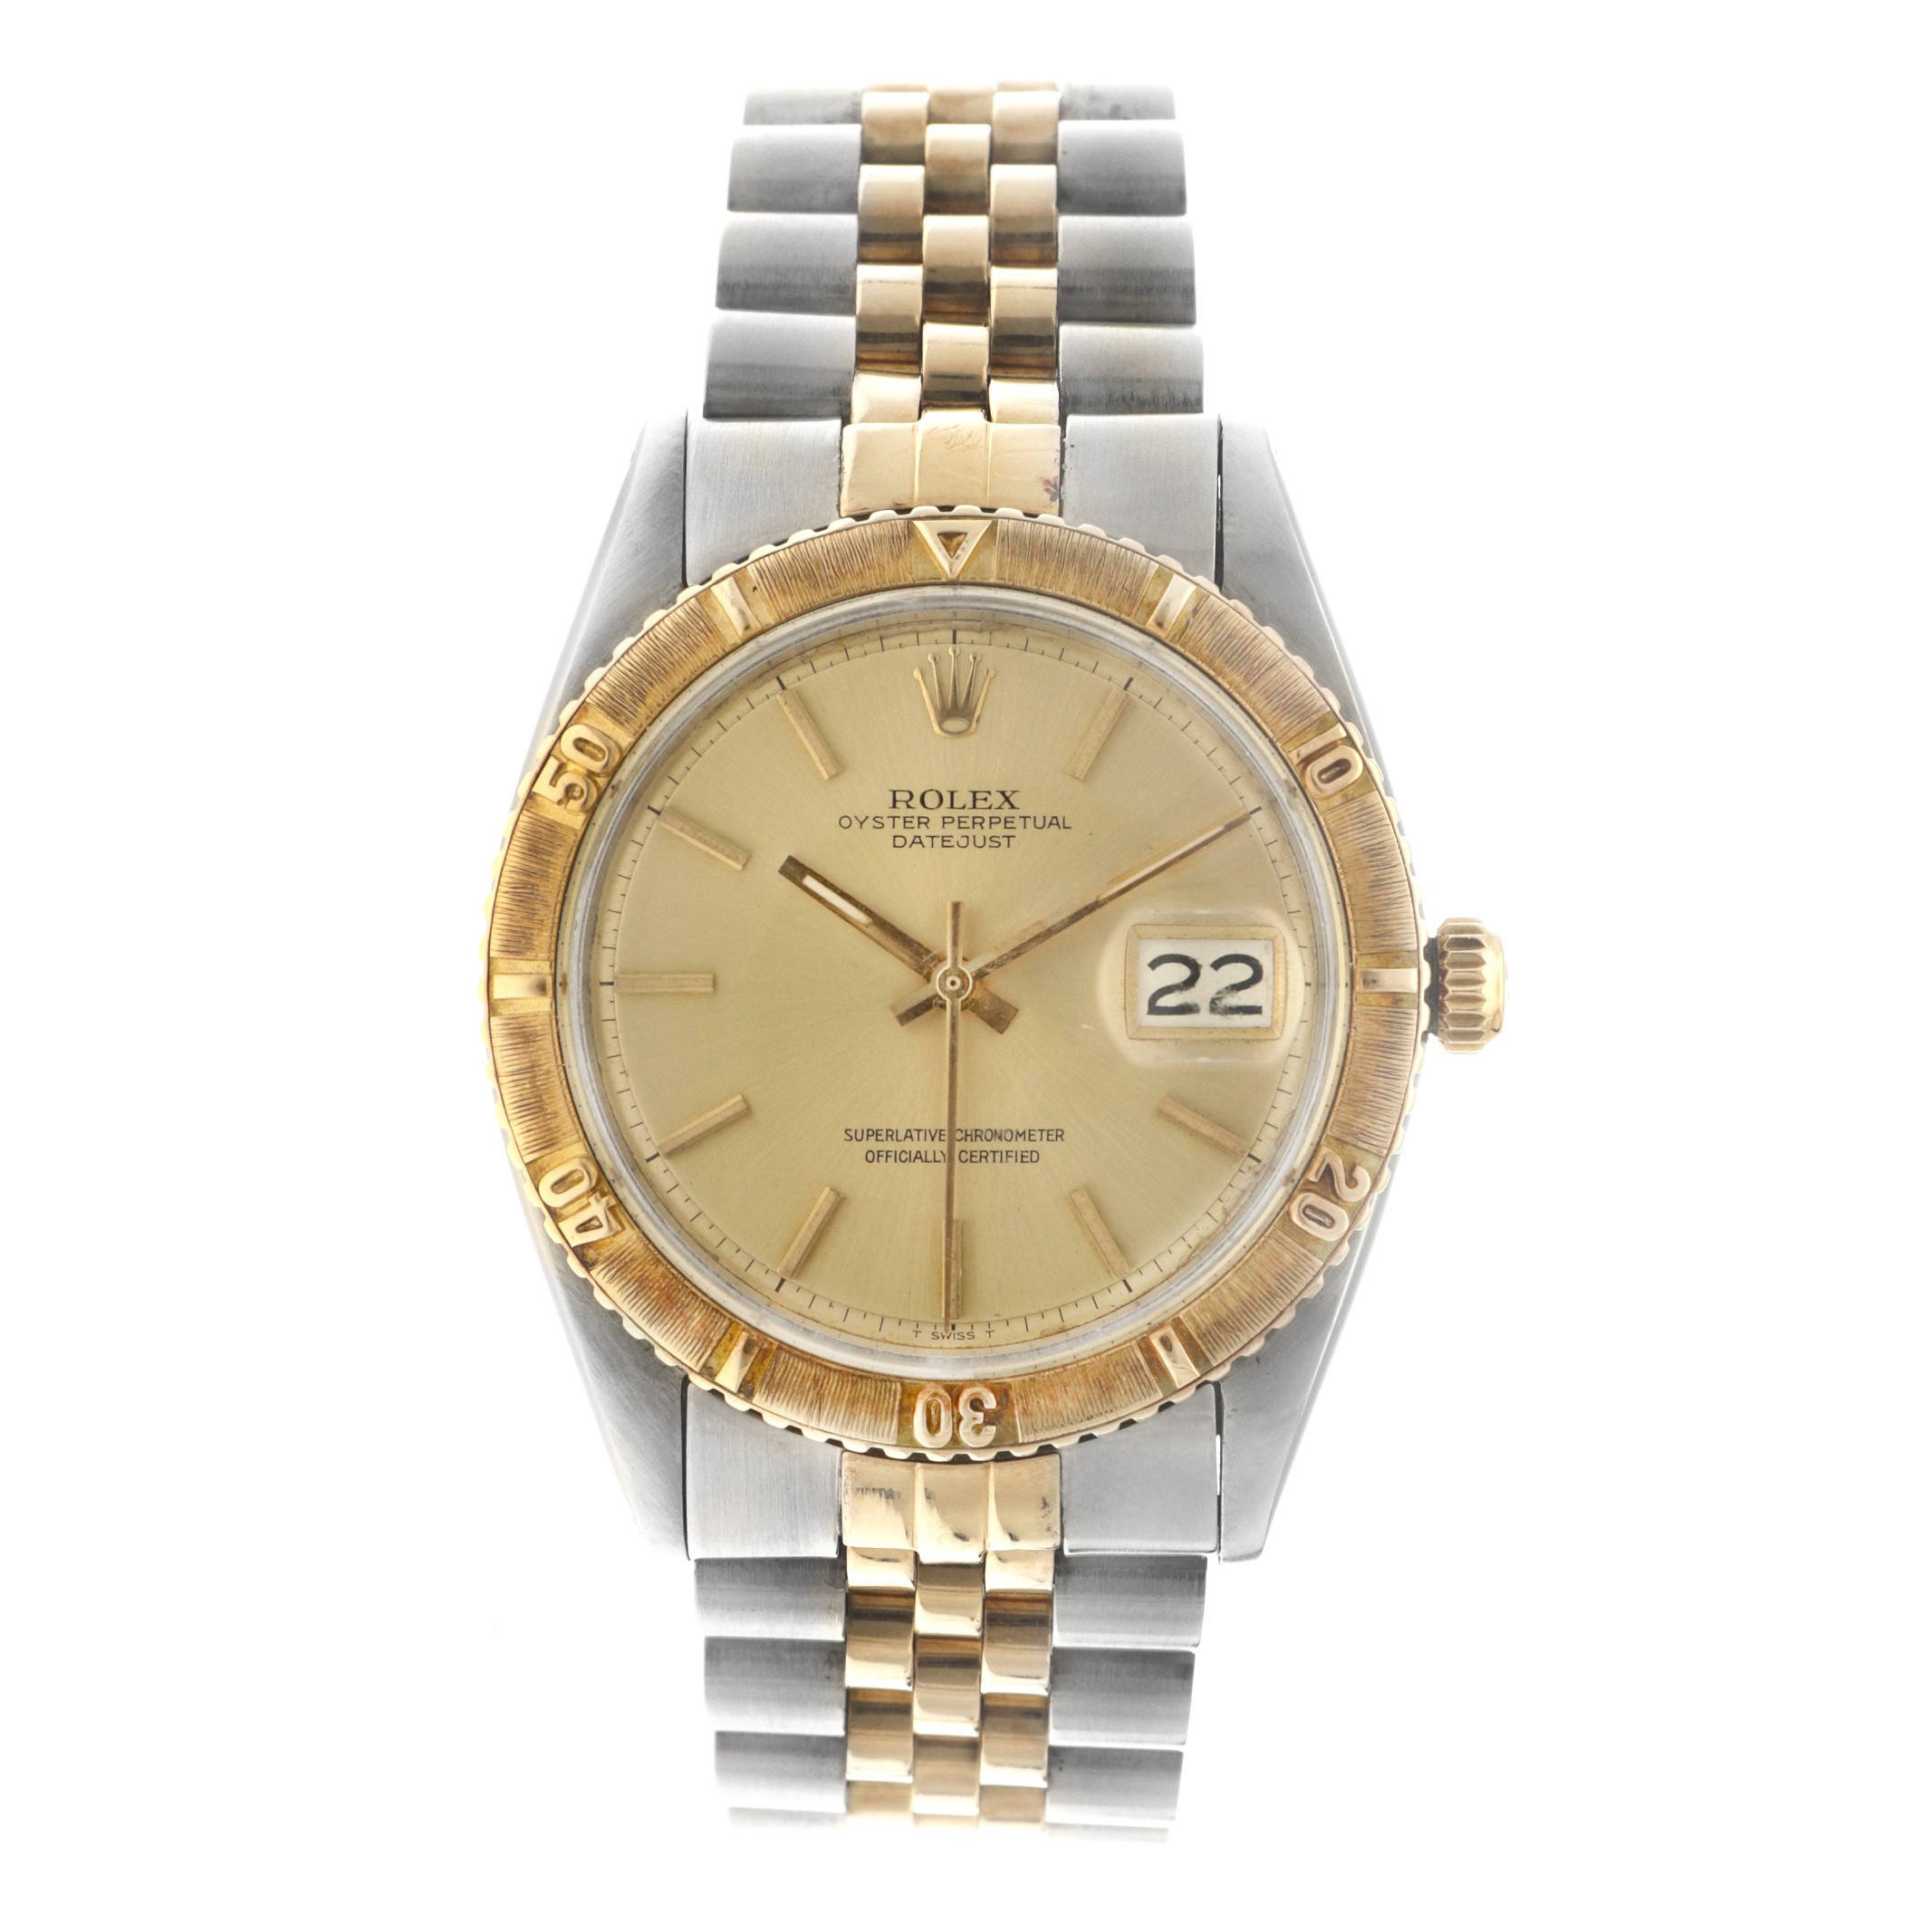 No Reserve - Rolex Datejust 36 Turn-O-Graph 1625 - Men's watch - ca. 1978.